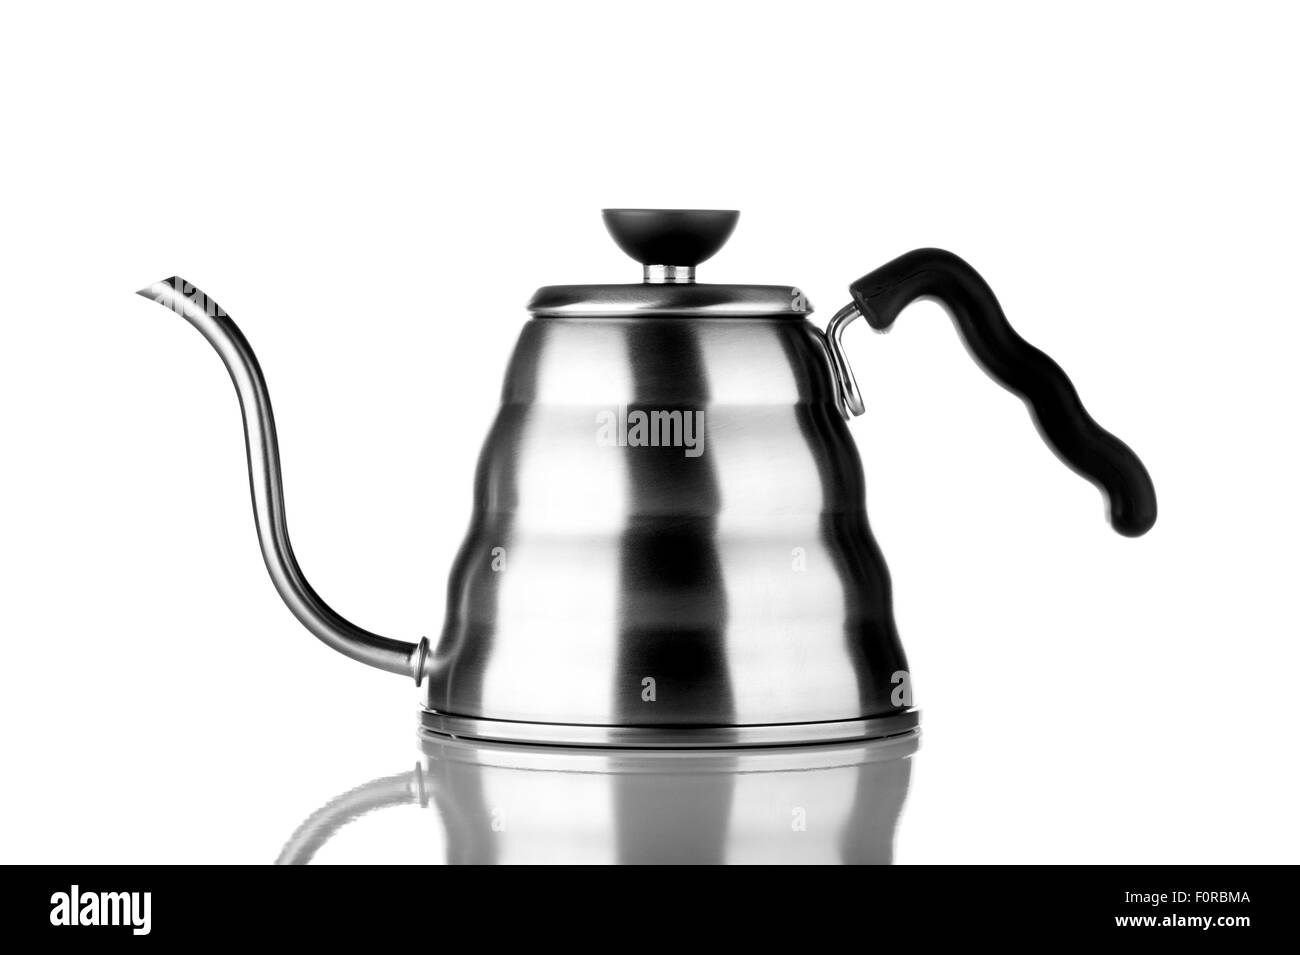 Hario aluminium drip kettle for coffee brewing Stock Photo